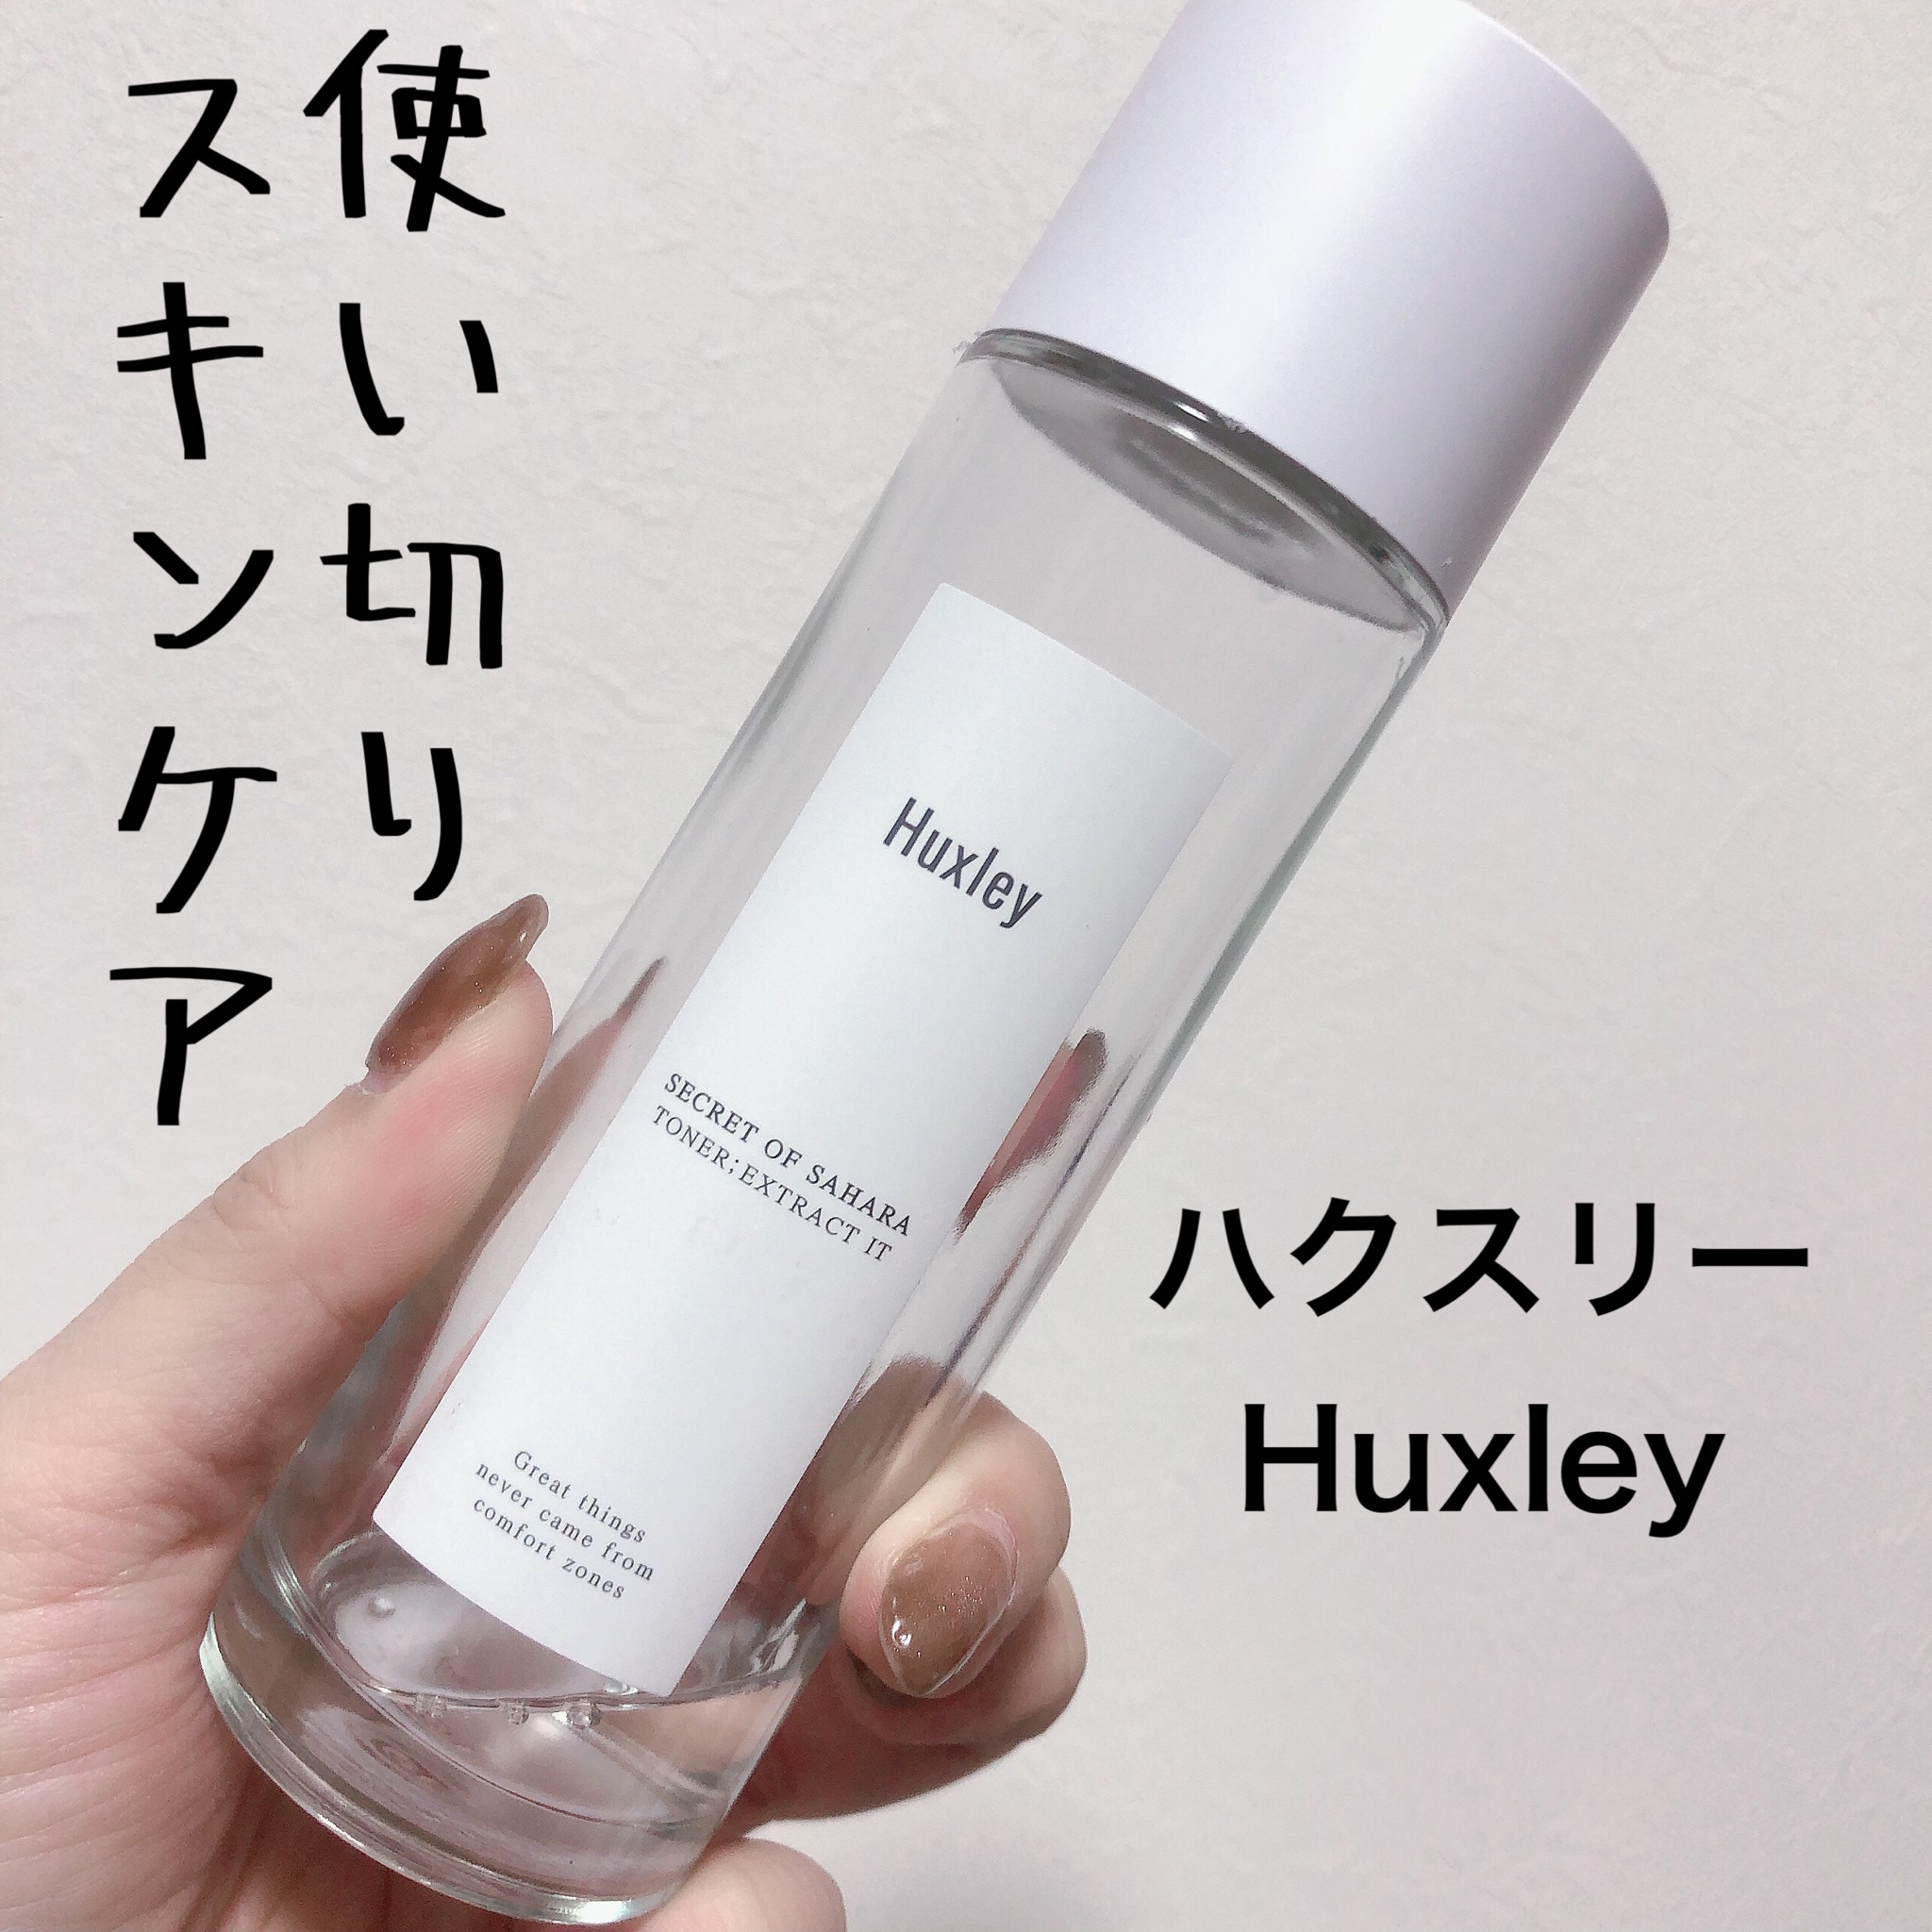 Huxley / トナー；エクストラクトイットの公式商品情報｜美容・化粧品